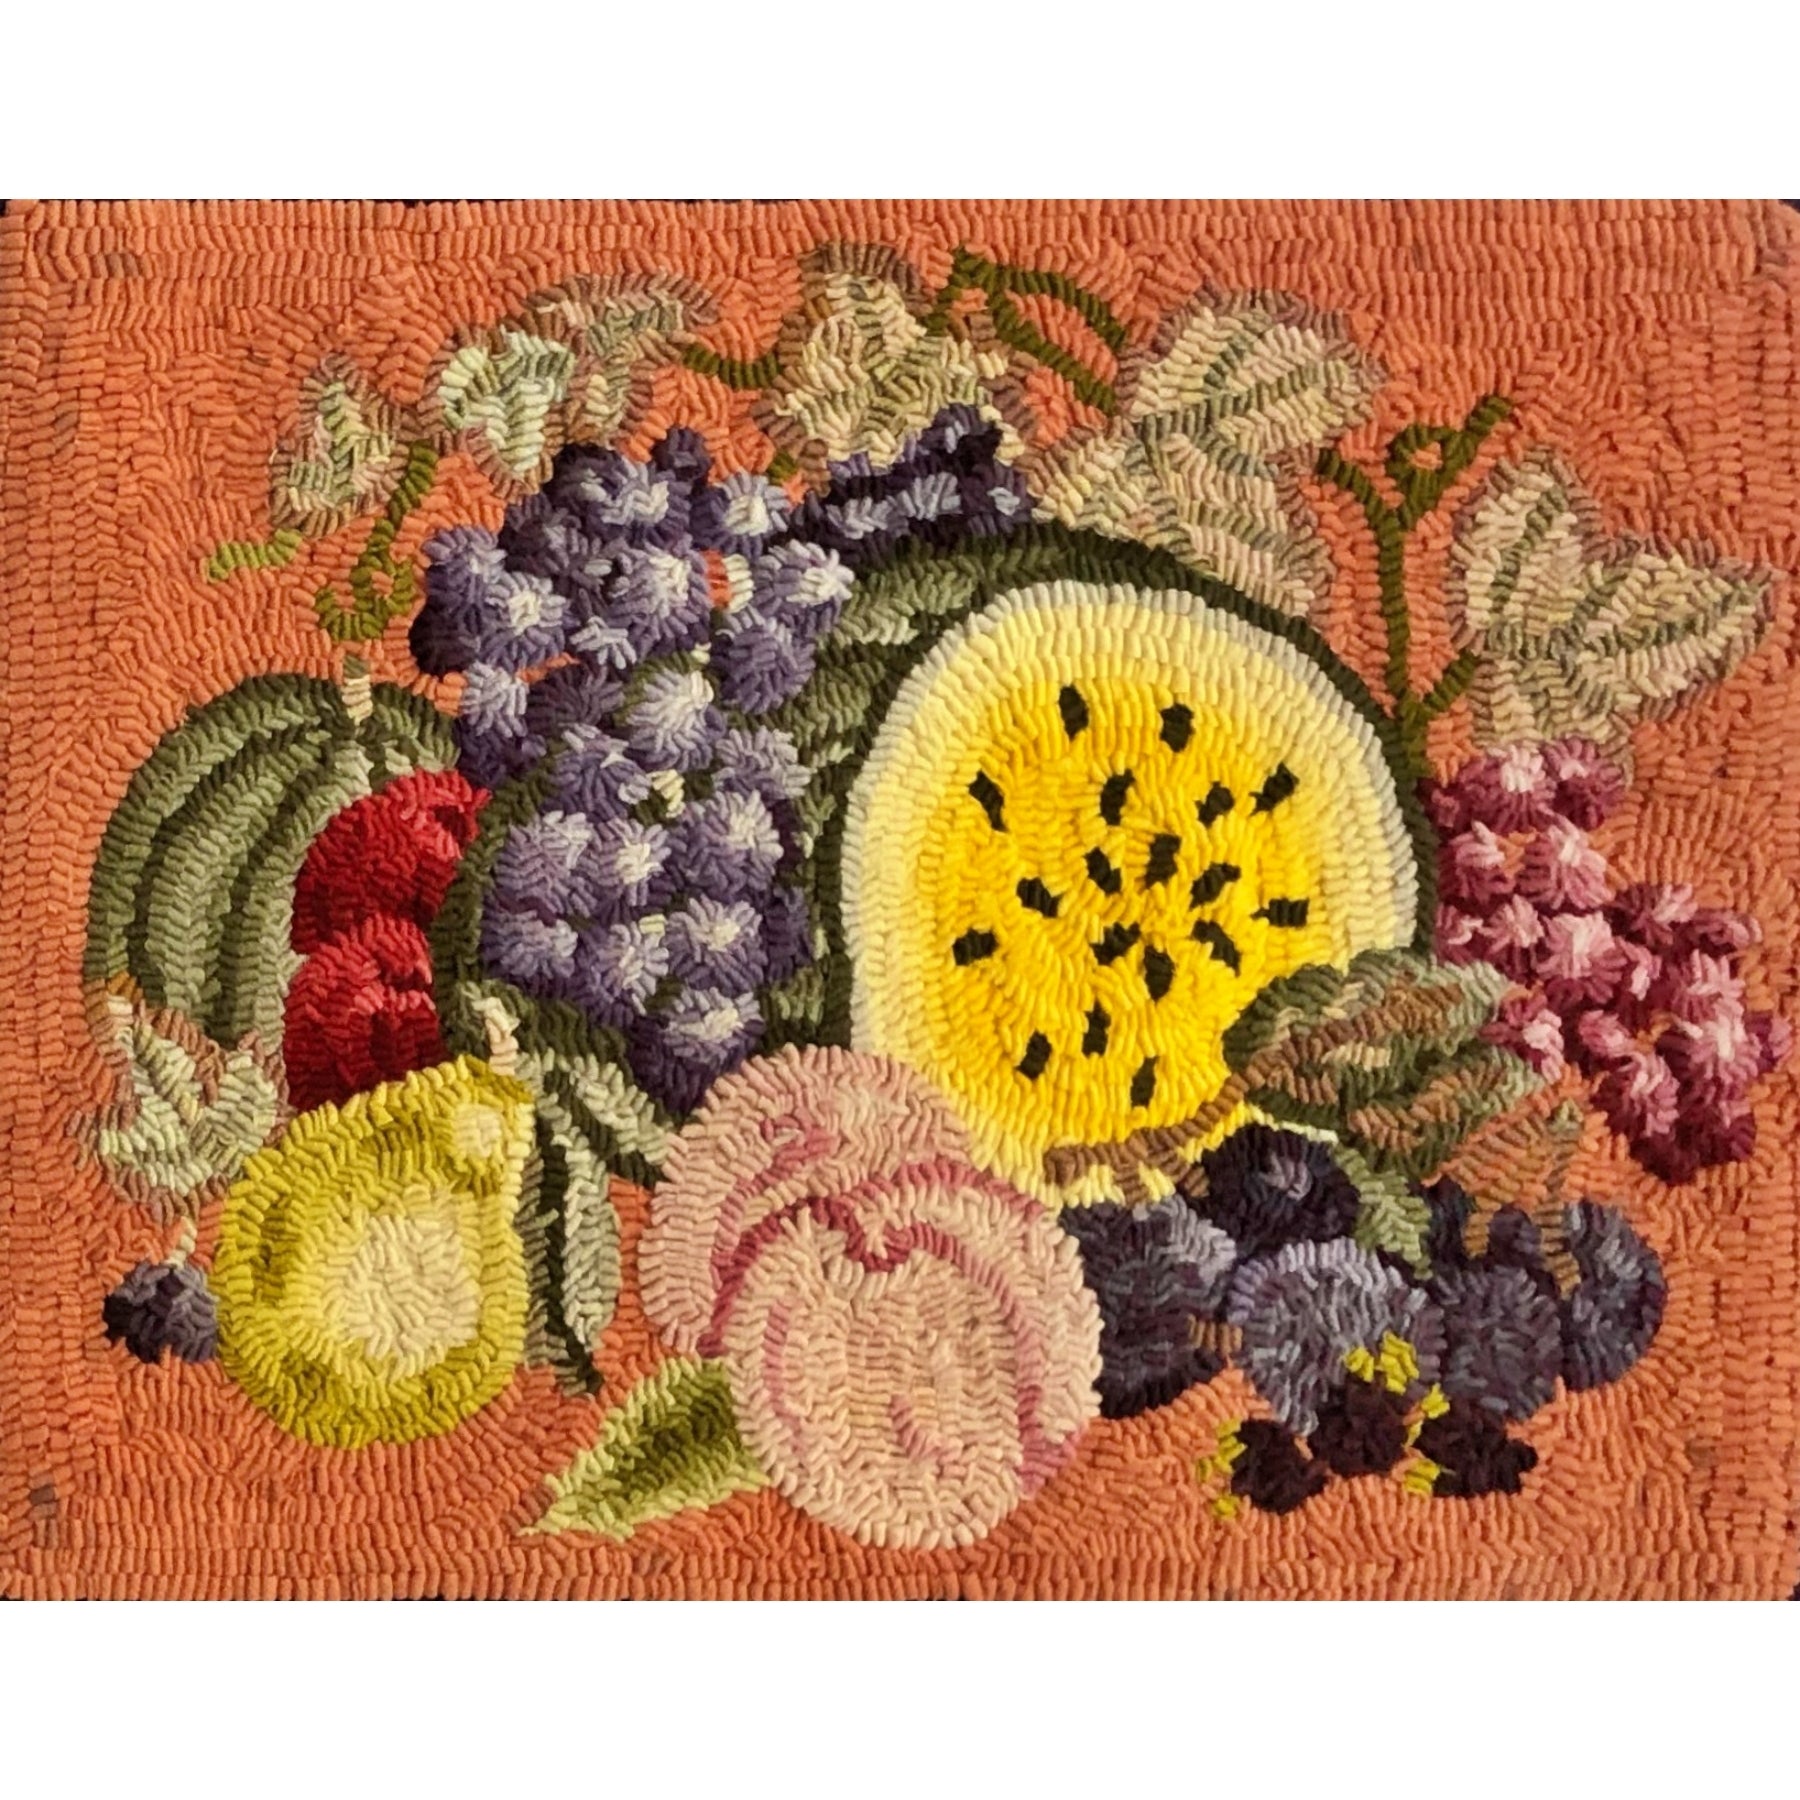 Autumn Fruit, rug hooked by Maddy Fraioli